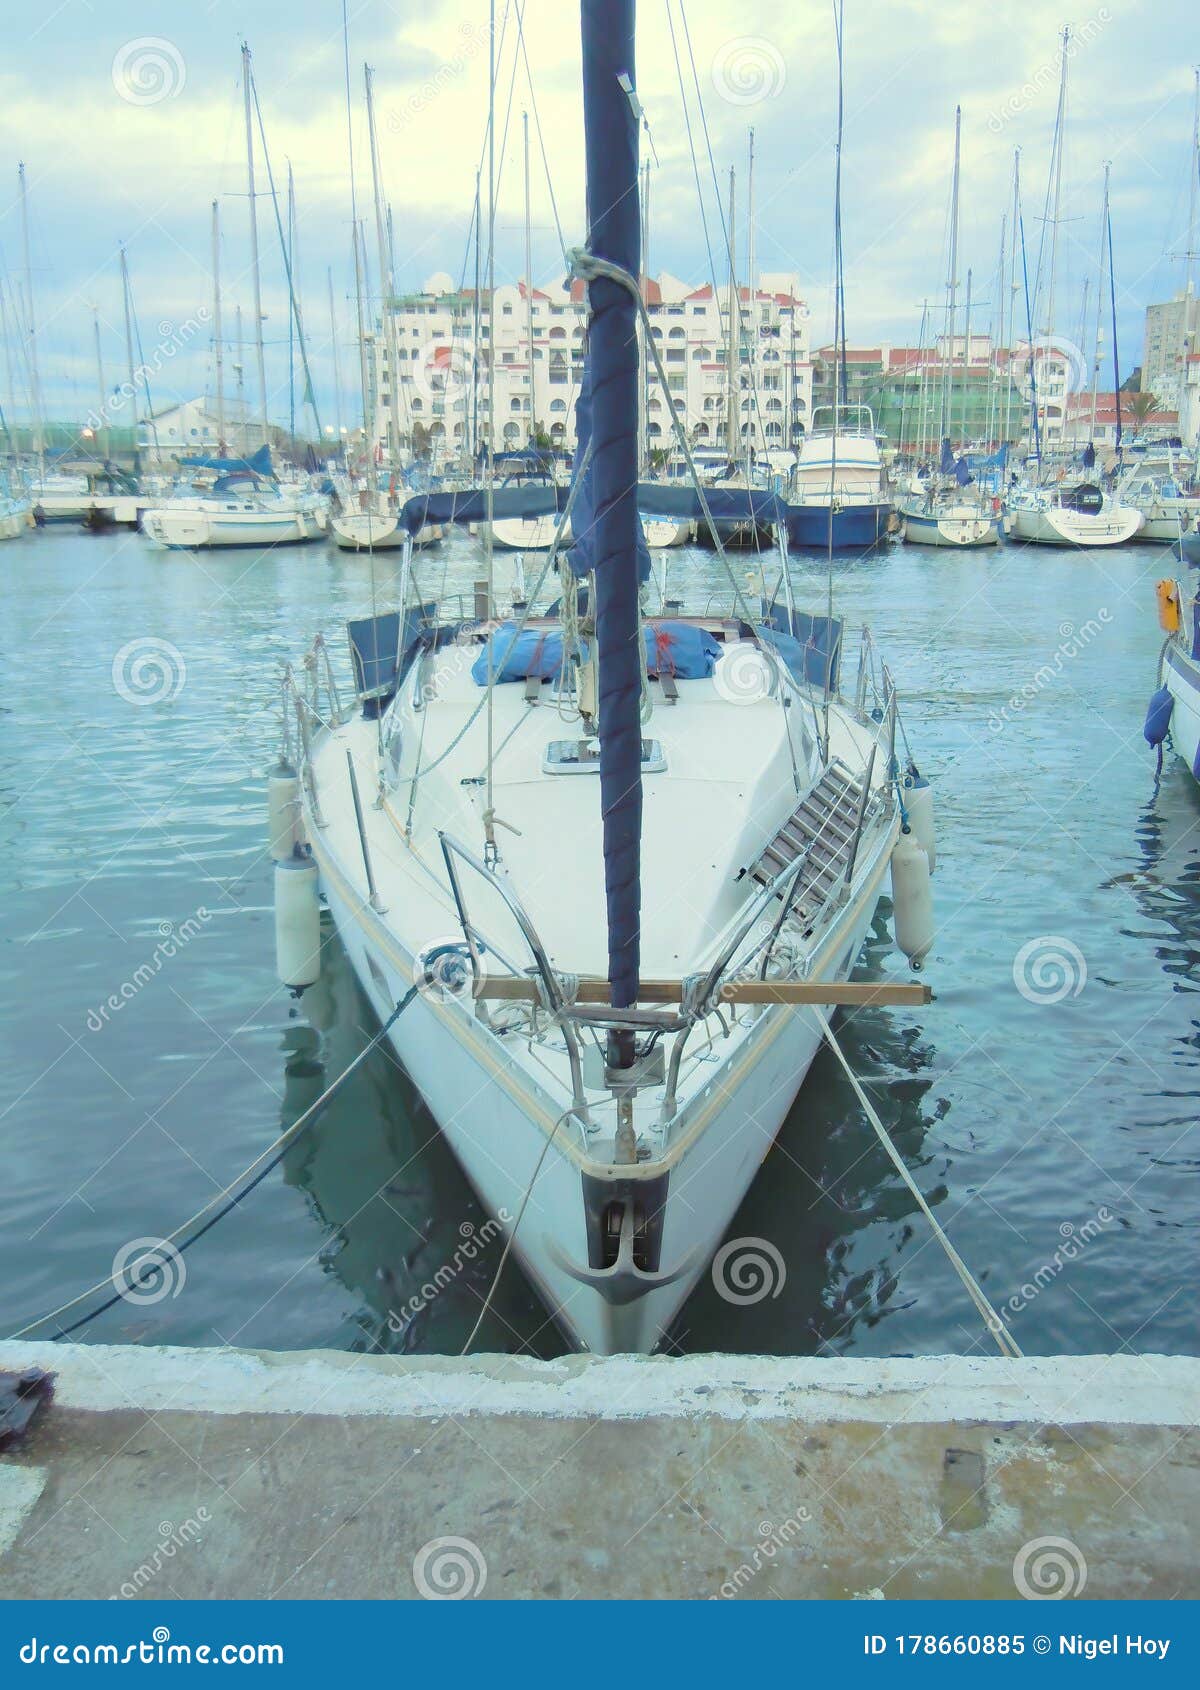 Sailing Boat Moored in Yacht Marina Stock Image - Image of boat